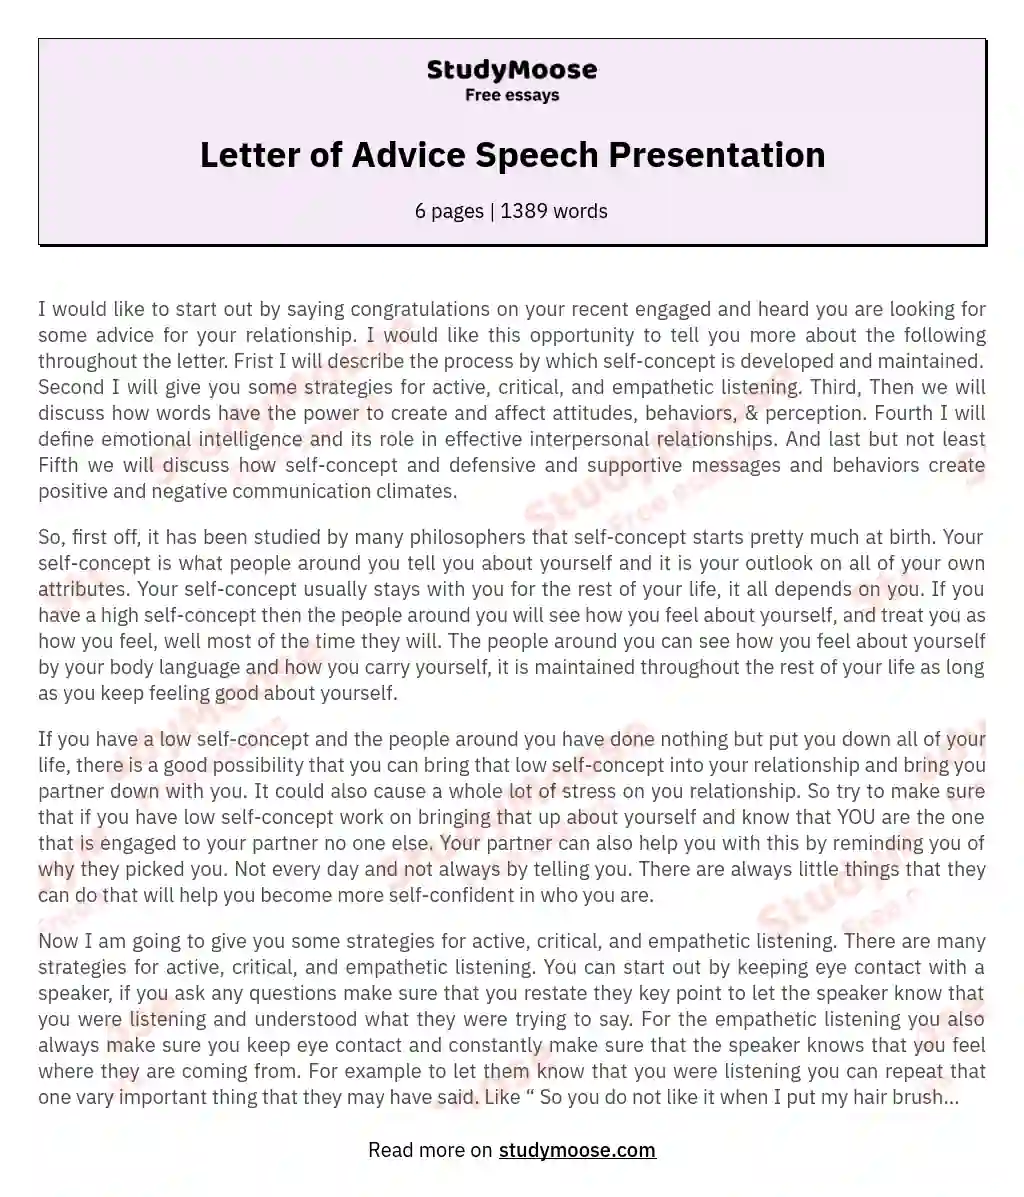 Letter of Advice Speech Presentation essay